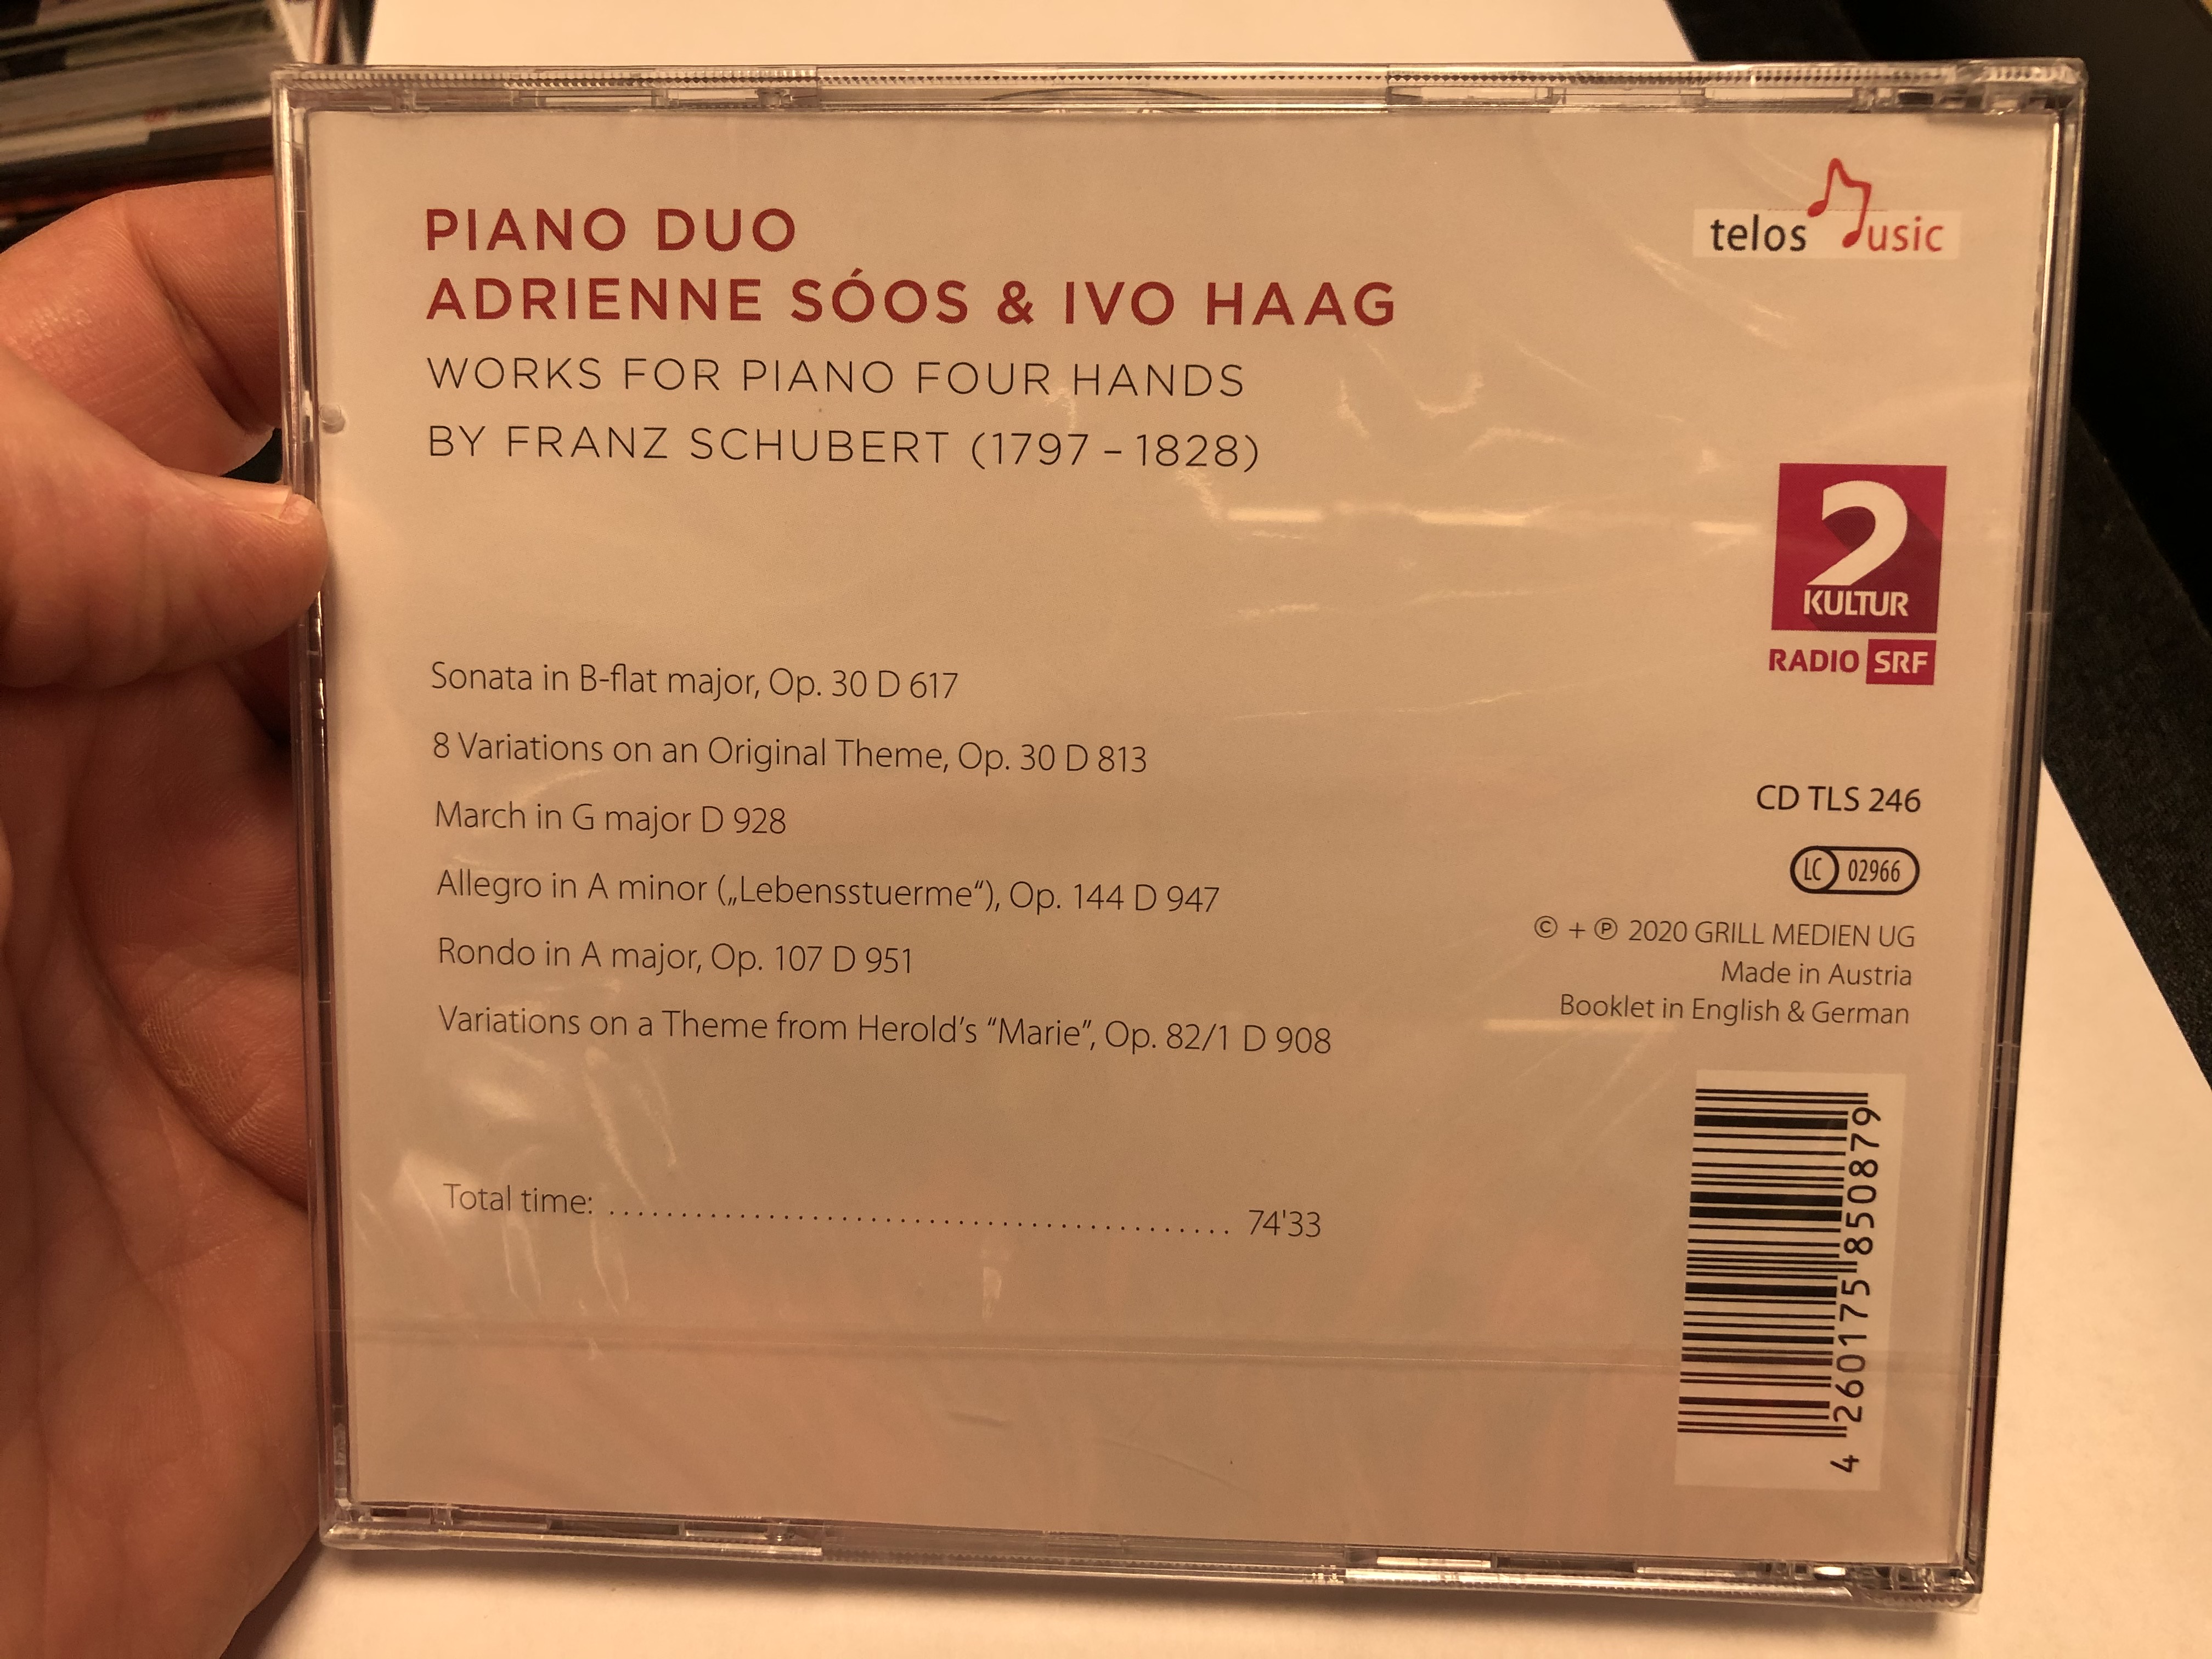 piano-duo-adrienne-soos-ivo-haag-schubert-works-for-piano-four-hands-telos-music-audio-cd-2020-cd-tls-246-2-.jpg